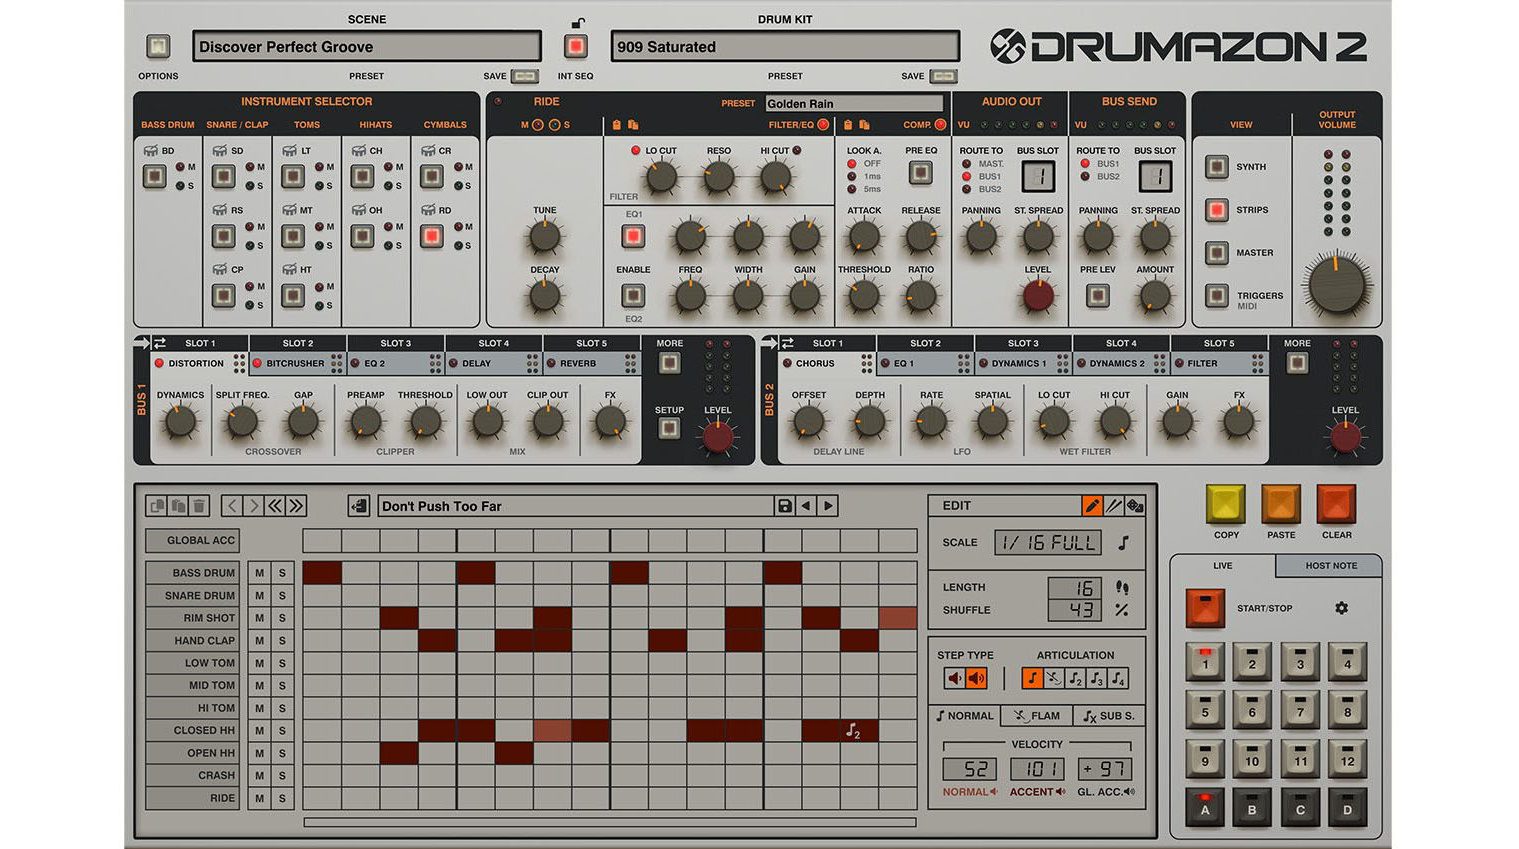 Drumazon 2 kommt inklusive Effektsektion und "Mastering Channel"